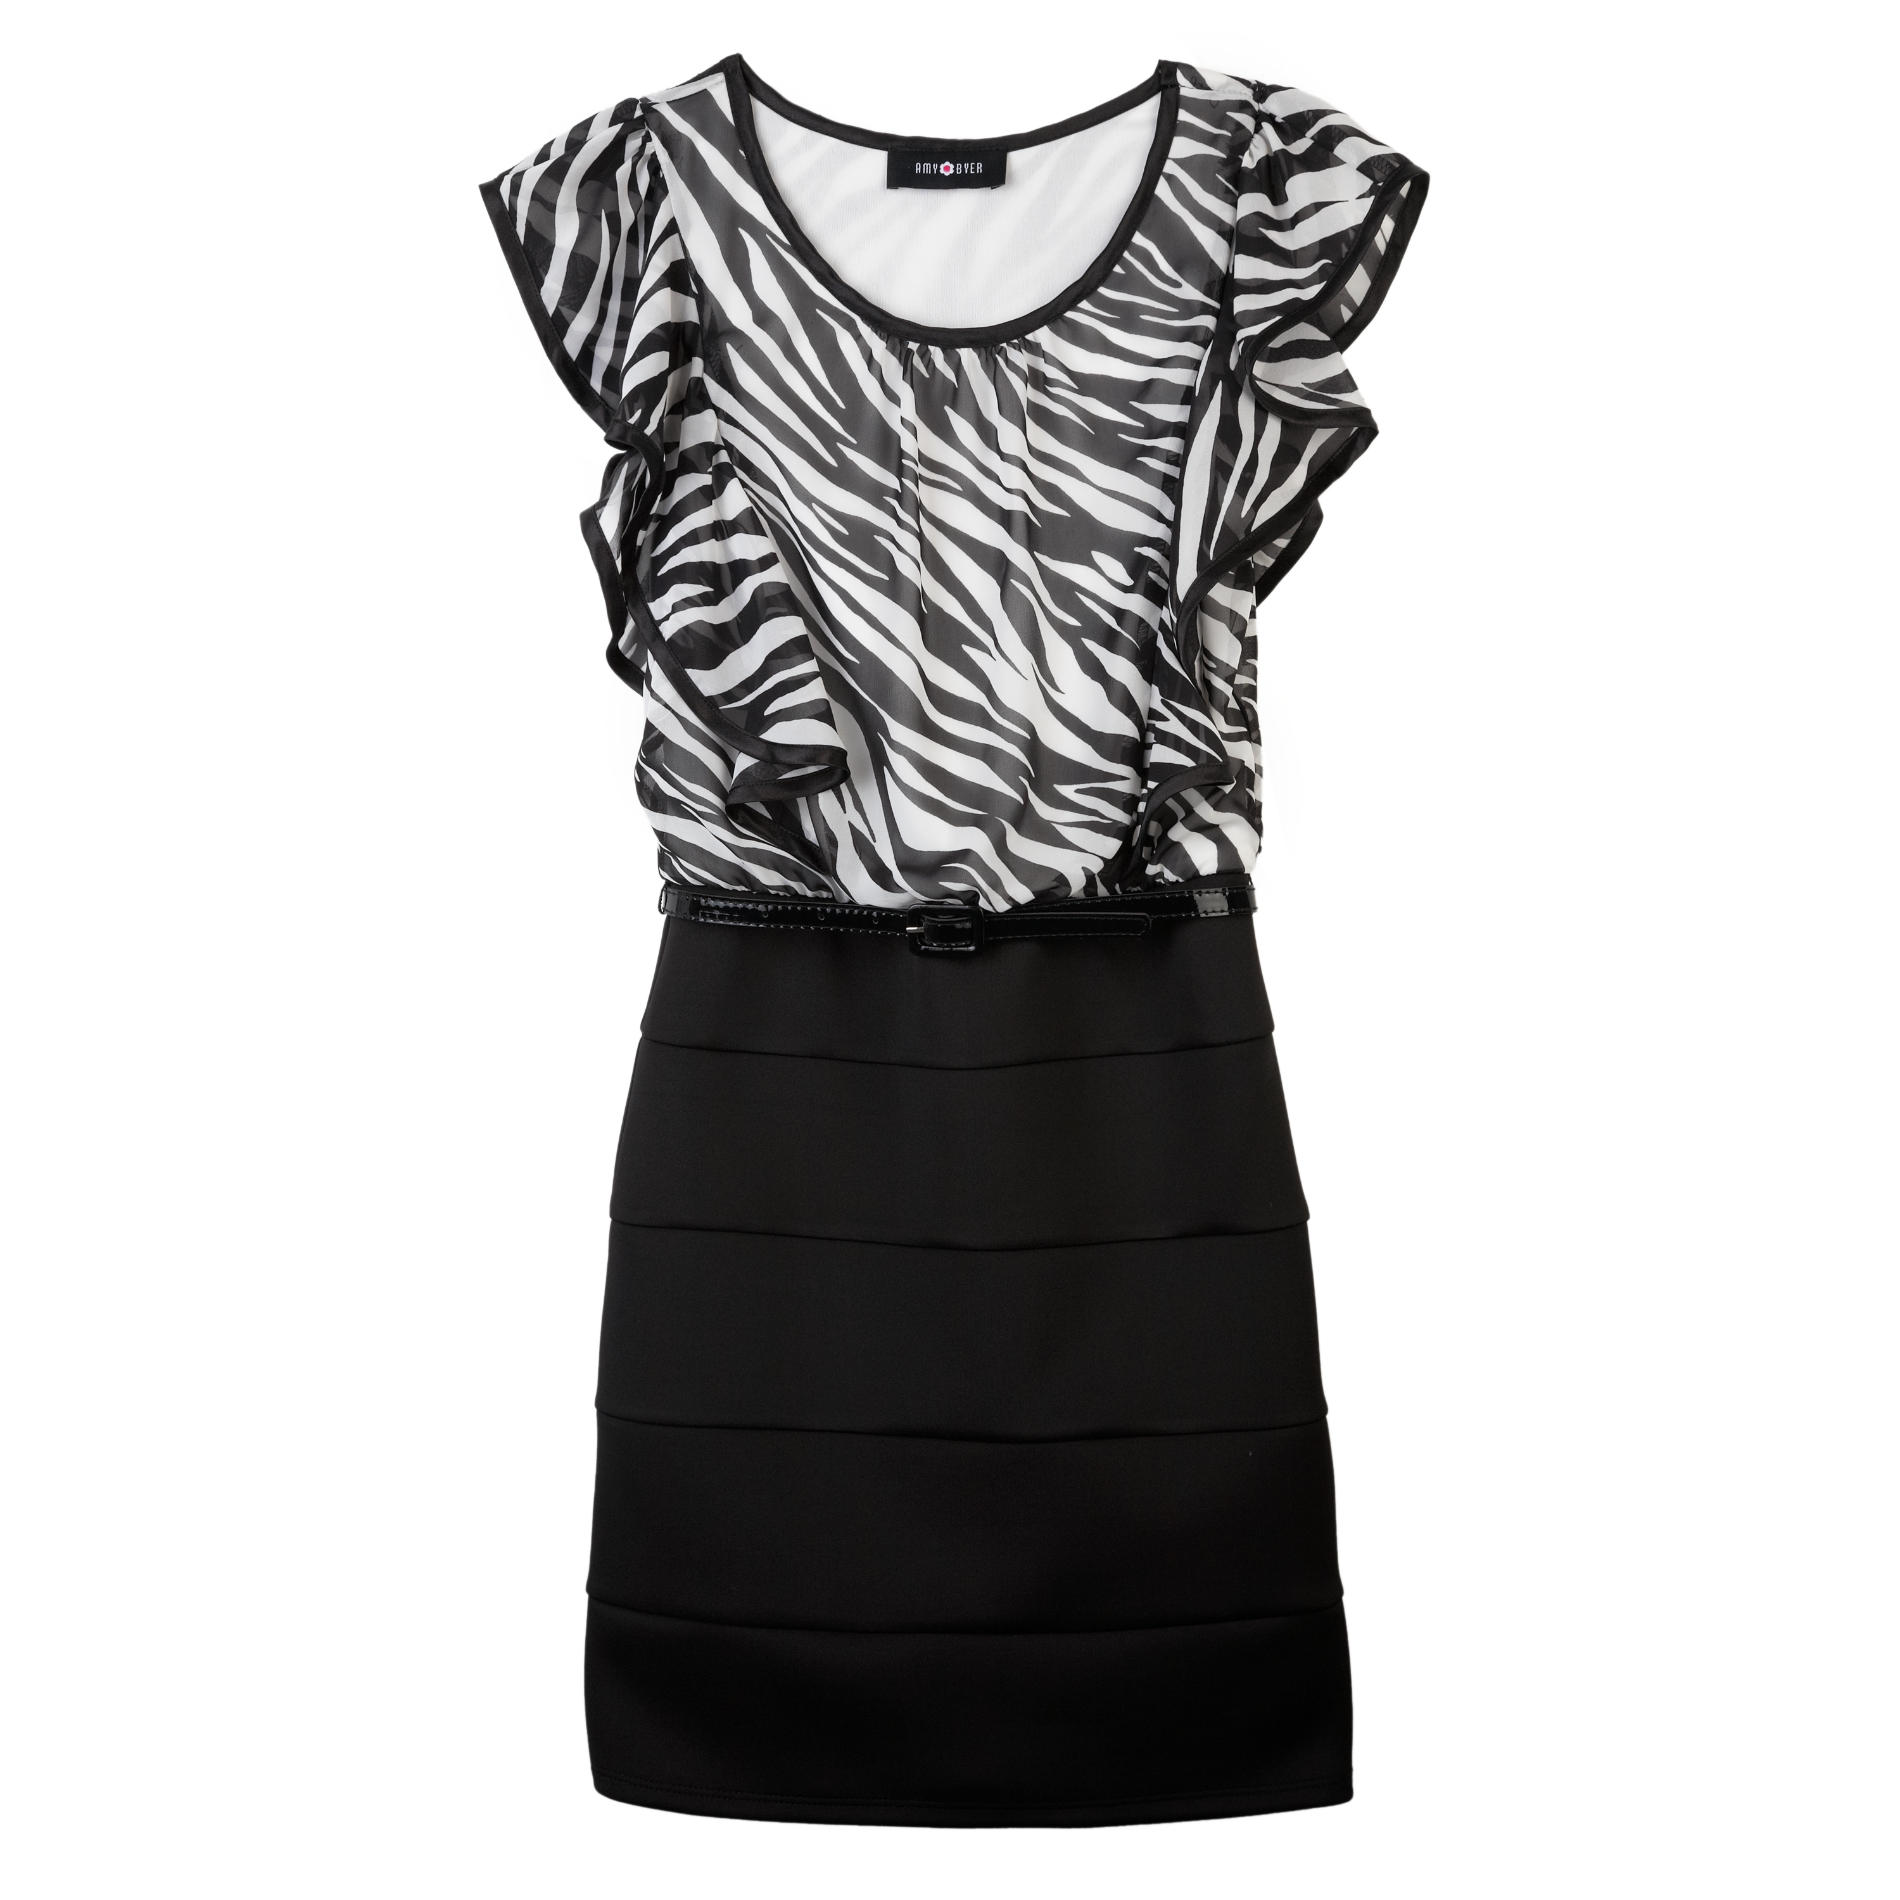 Zebra Print Sequin Dress